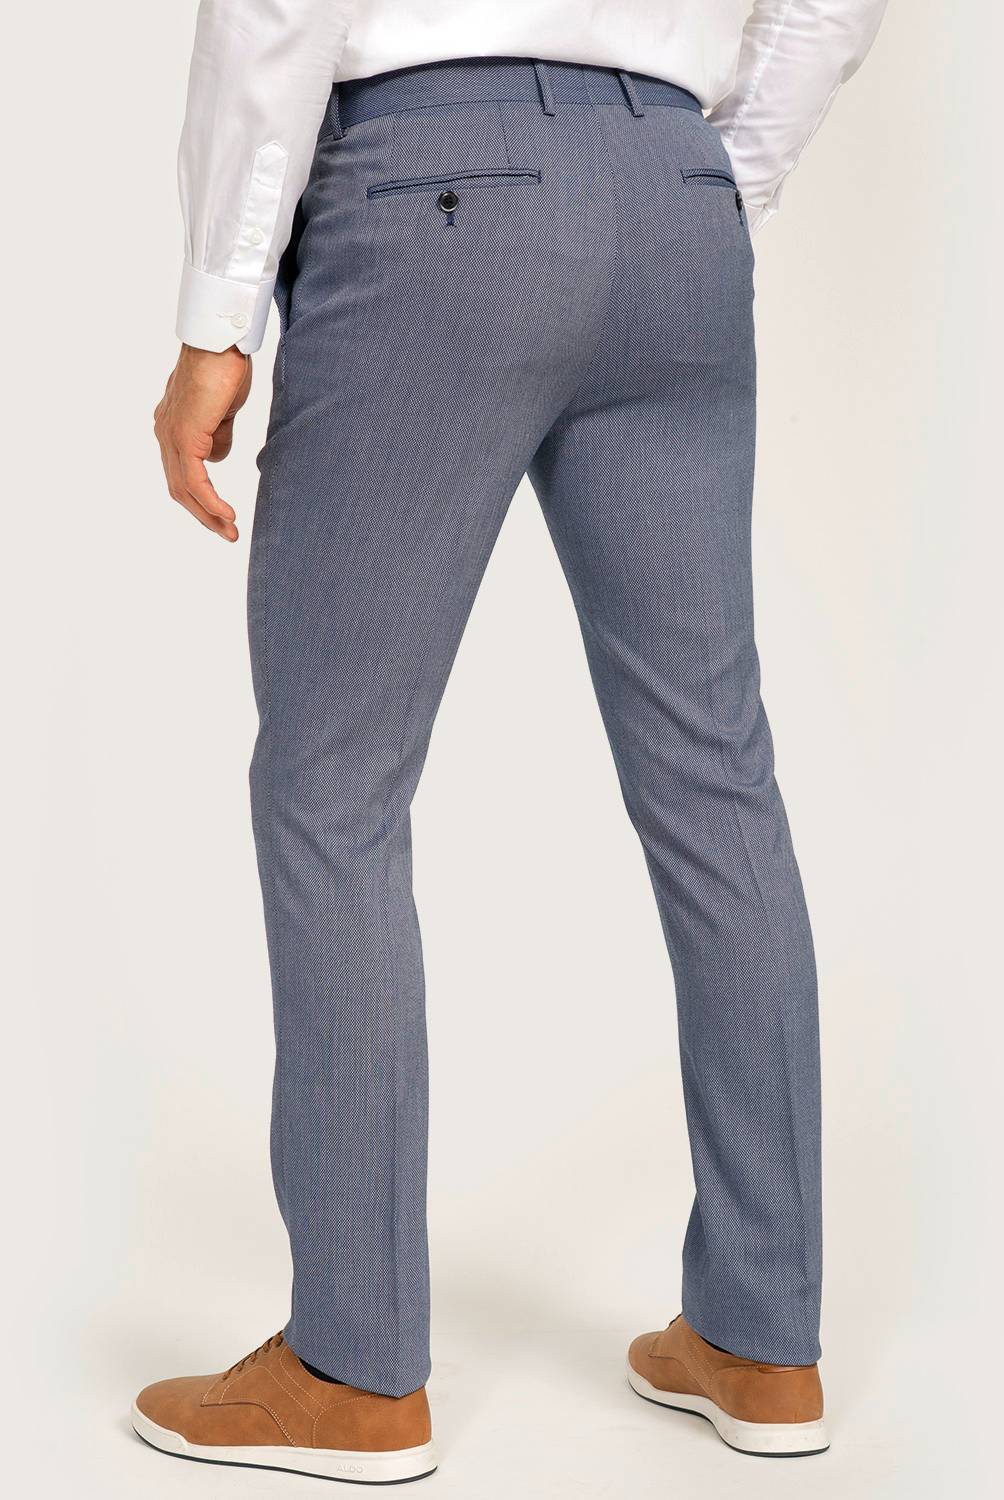 BASEMENT - Pantalón Traje Azul Claro Skinny Fit Elasticado